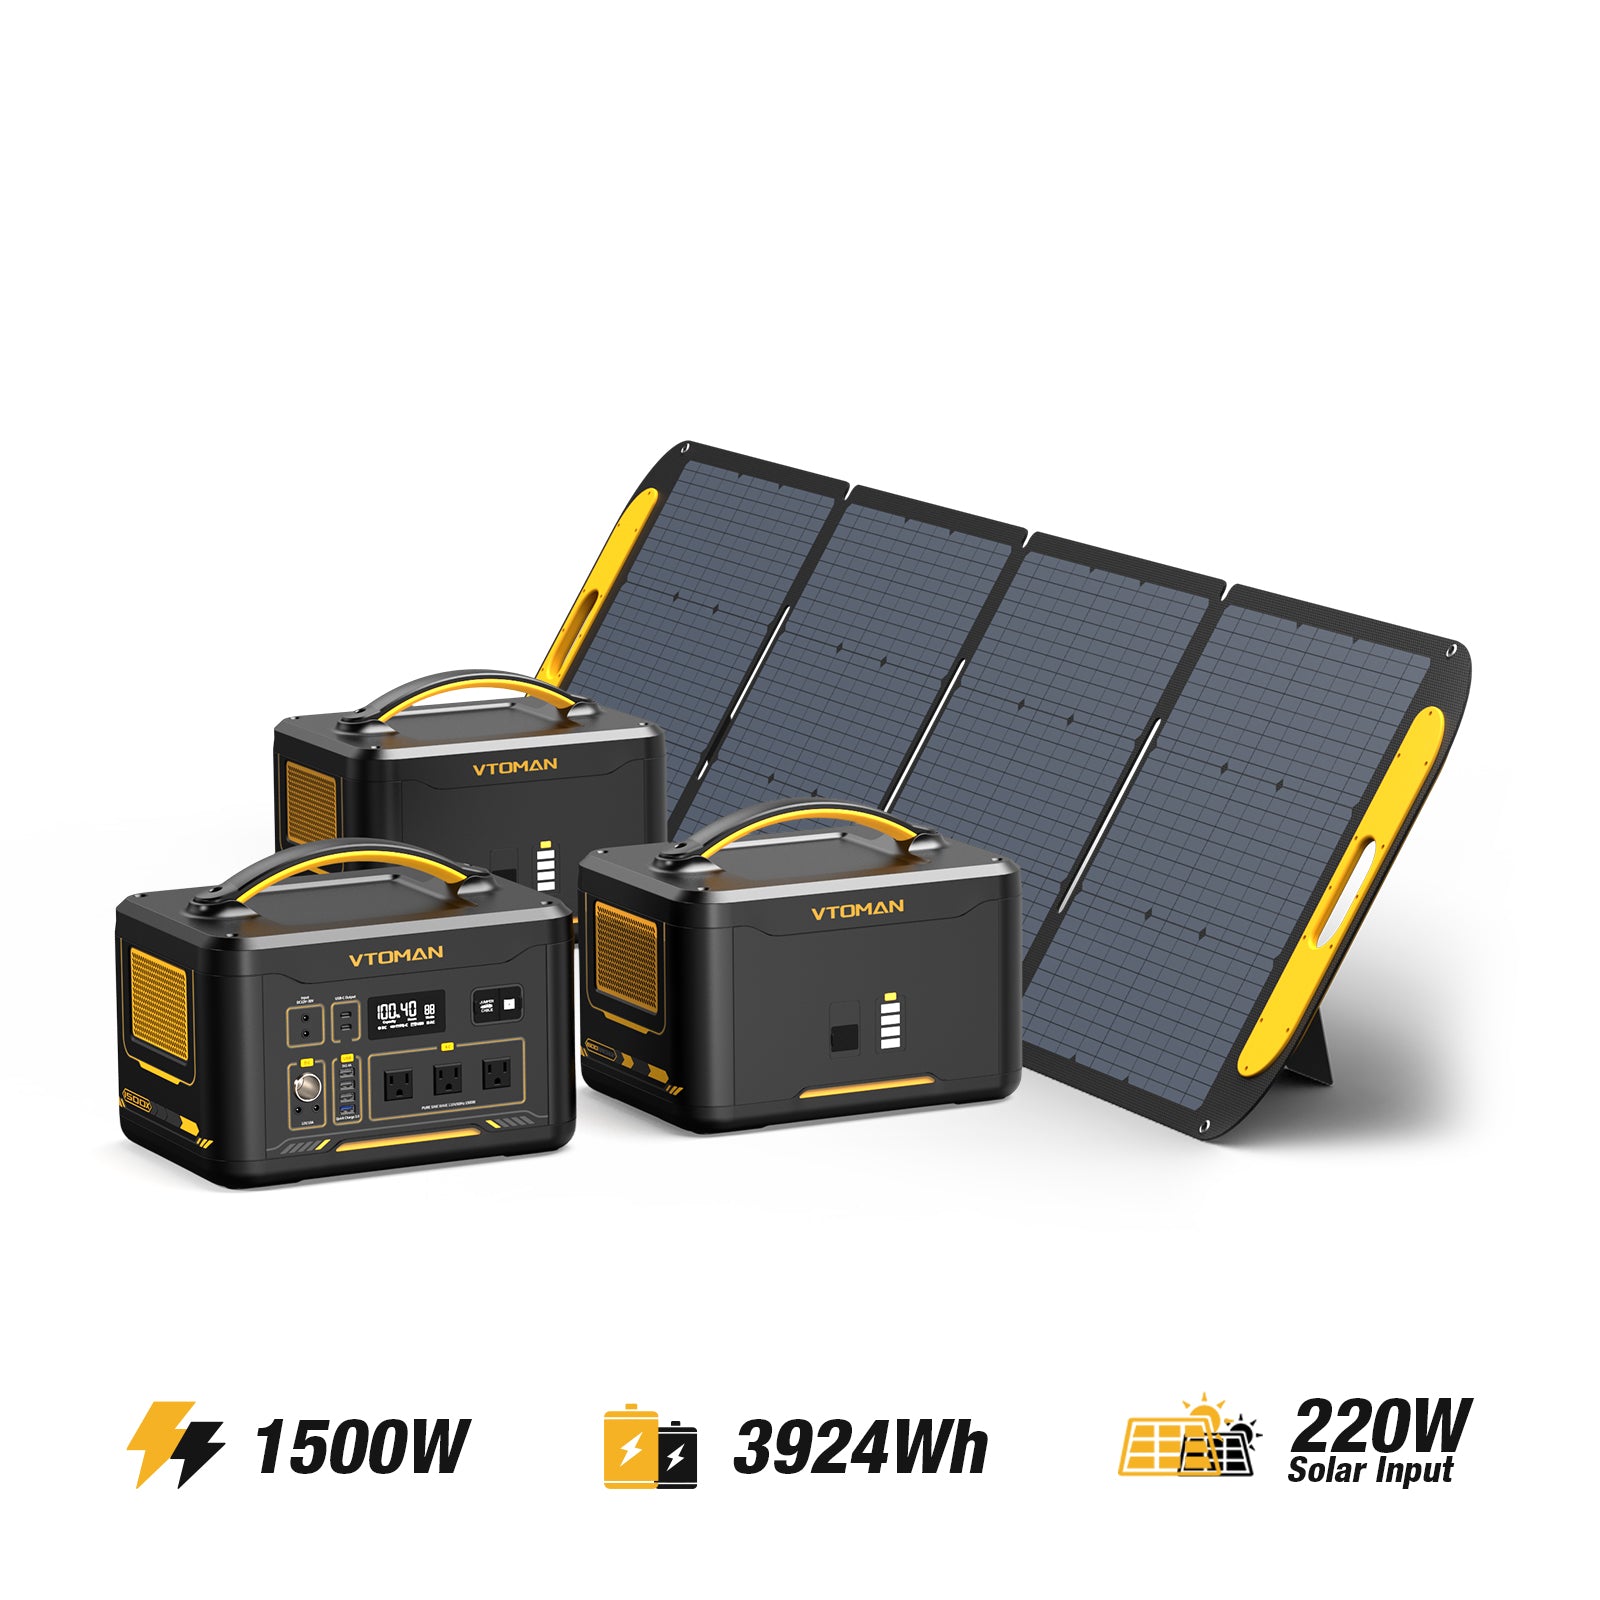 Jump 1500W/3924Wh 220W Solar Generator